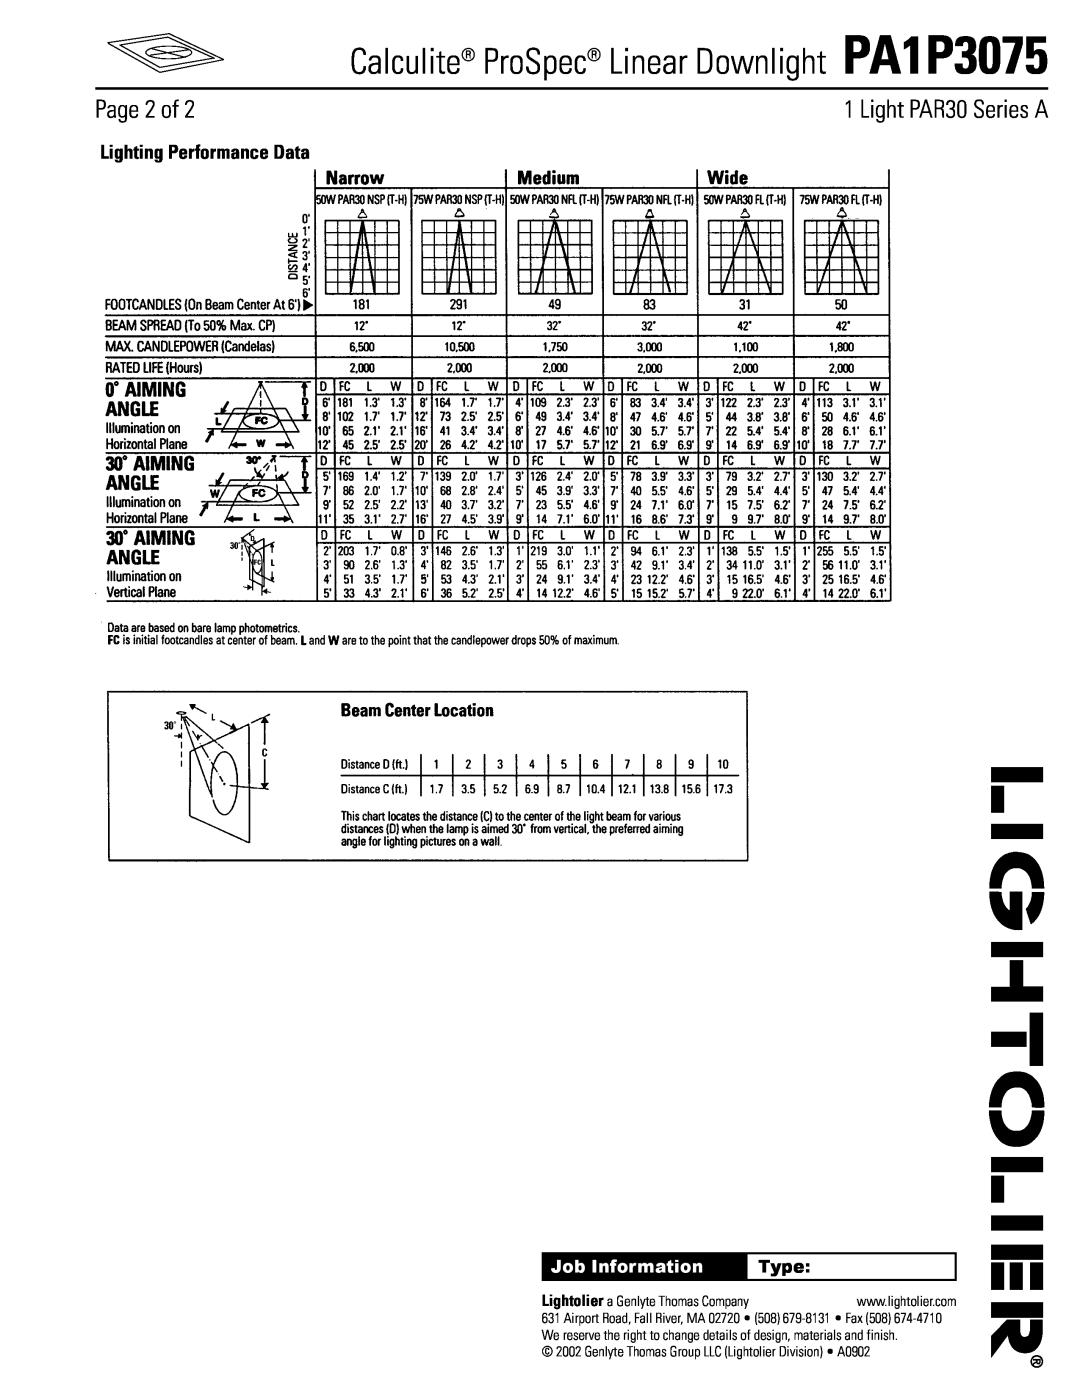 Lightolier PA1P3075 manual Page 2 of, Light PAR30 Series A, Lighting Performance Data, Job Information, Type 